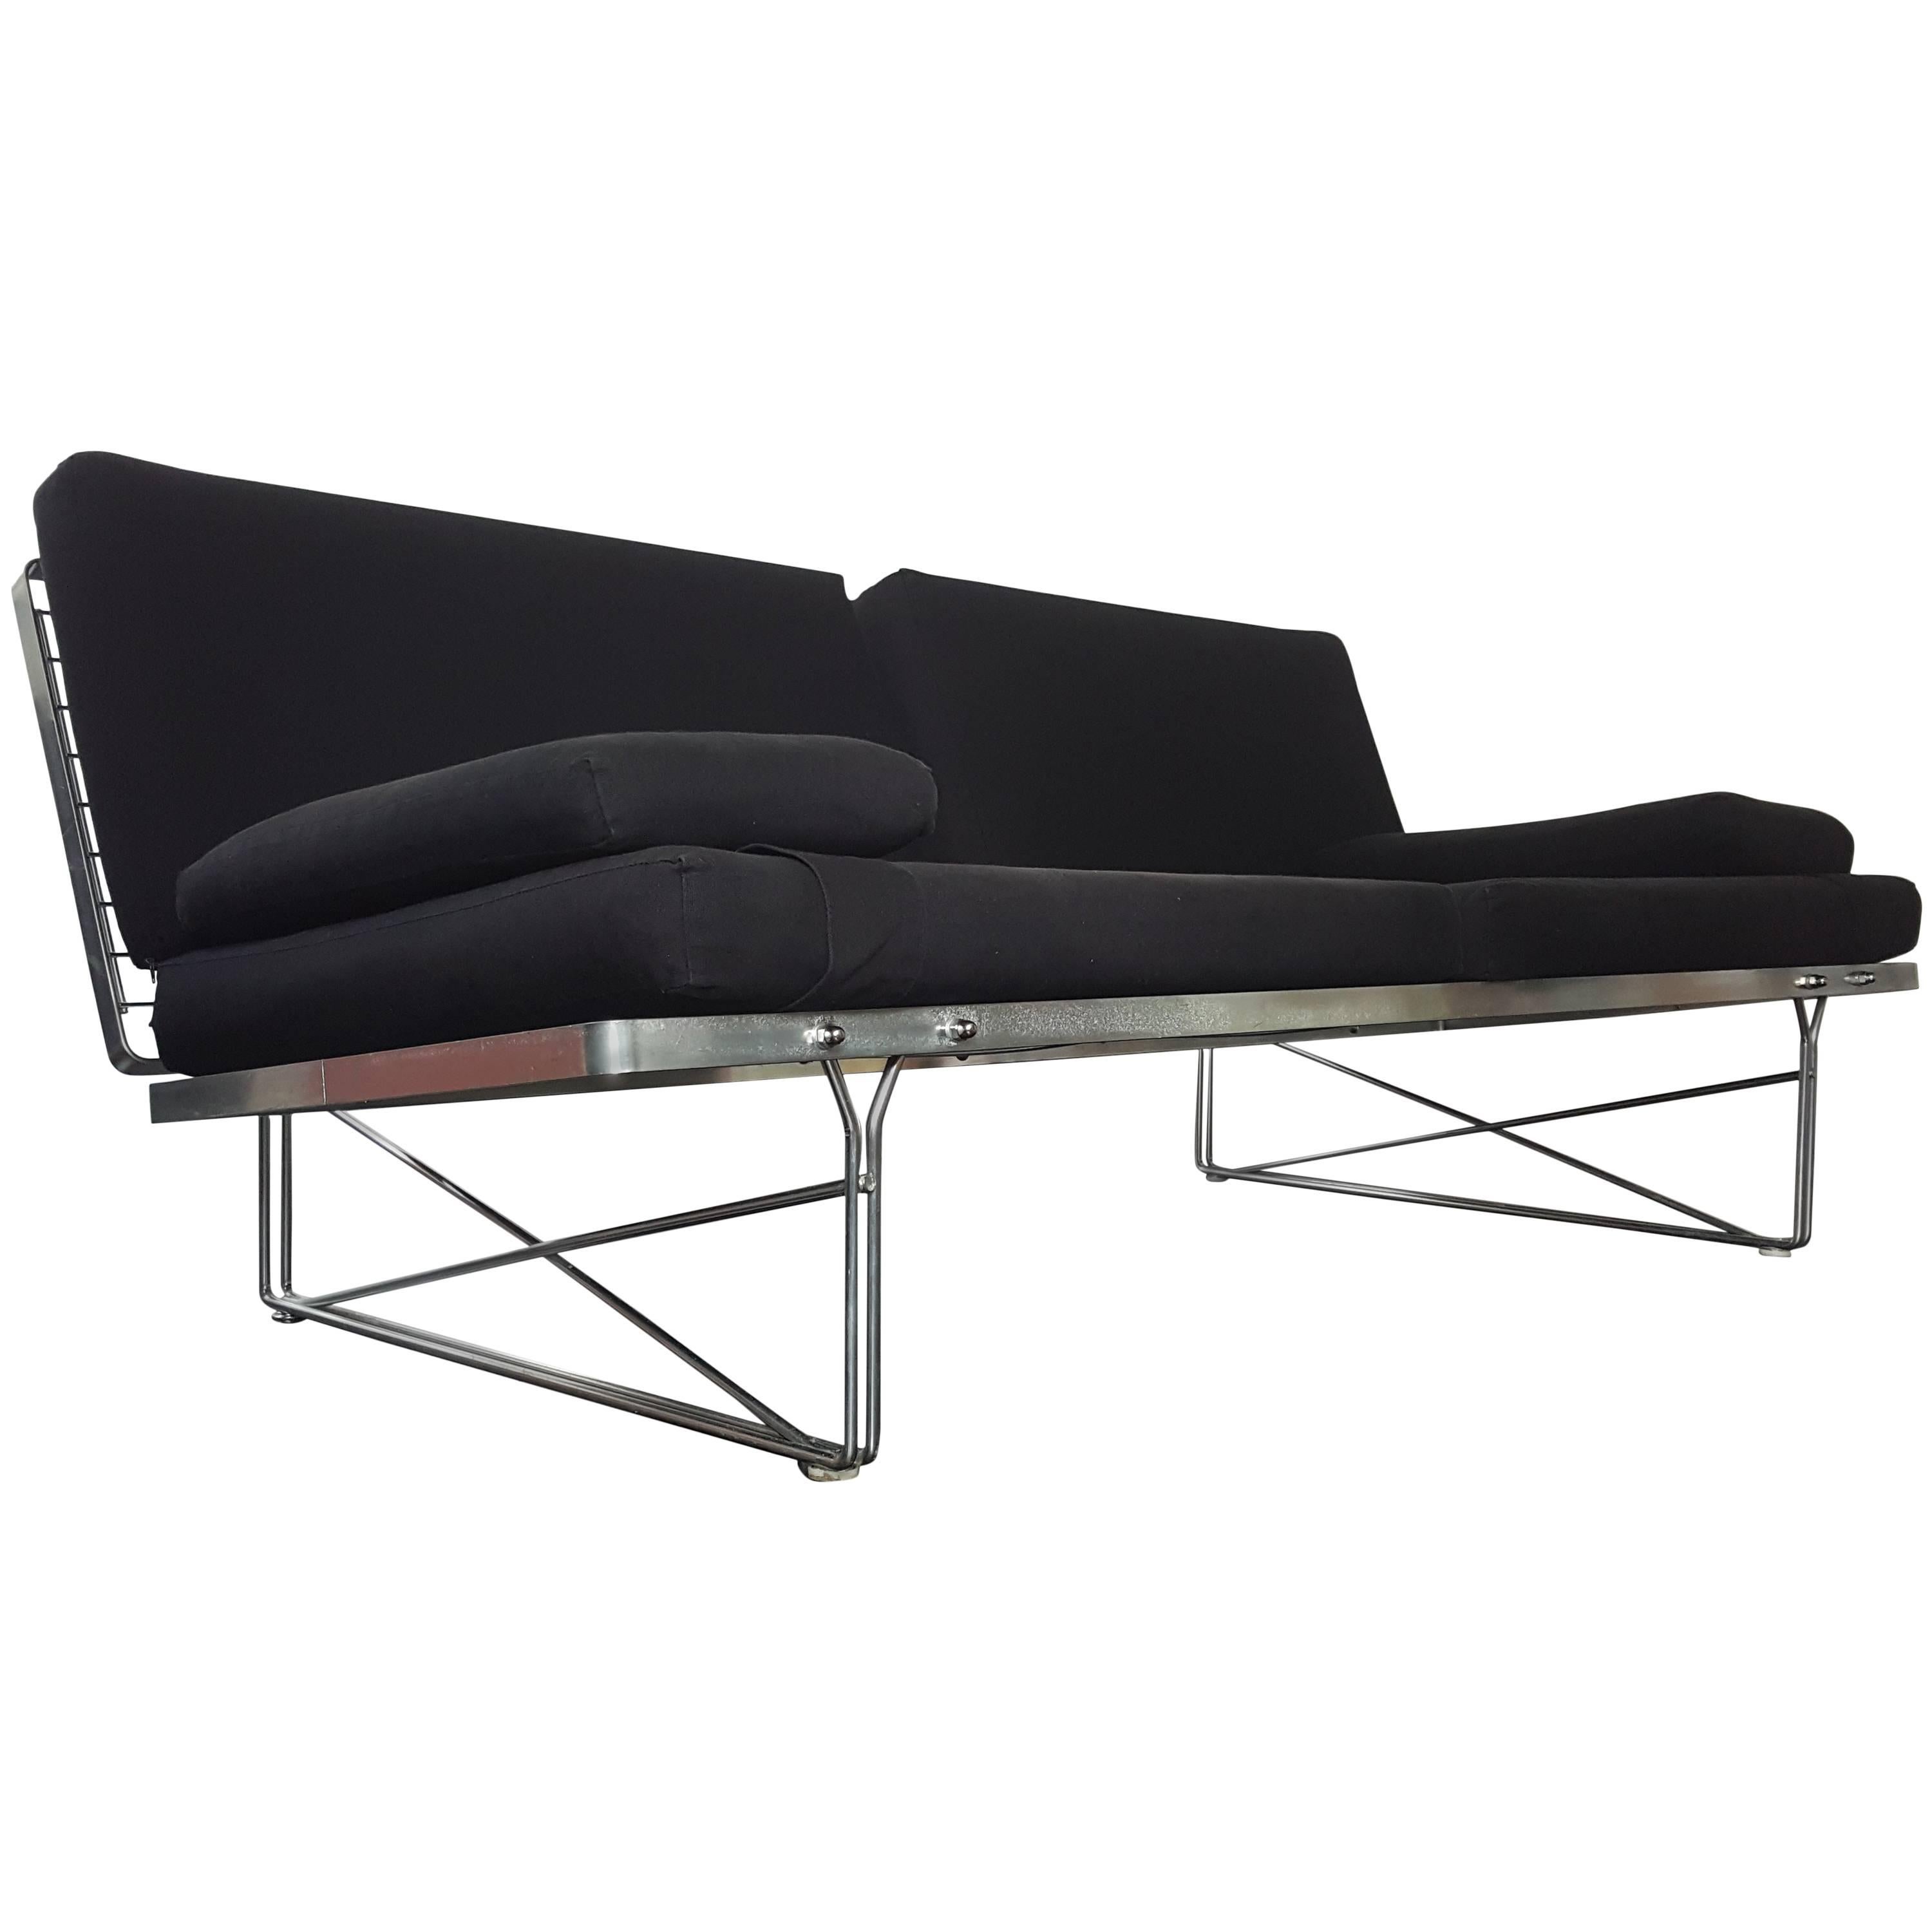 Niels Gammelgaard for Ikea 'Moment' Sofa, Designed 1986